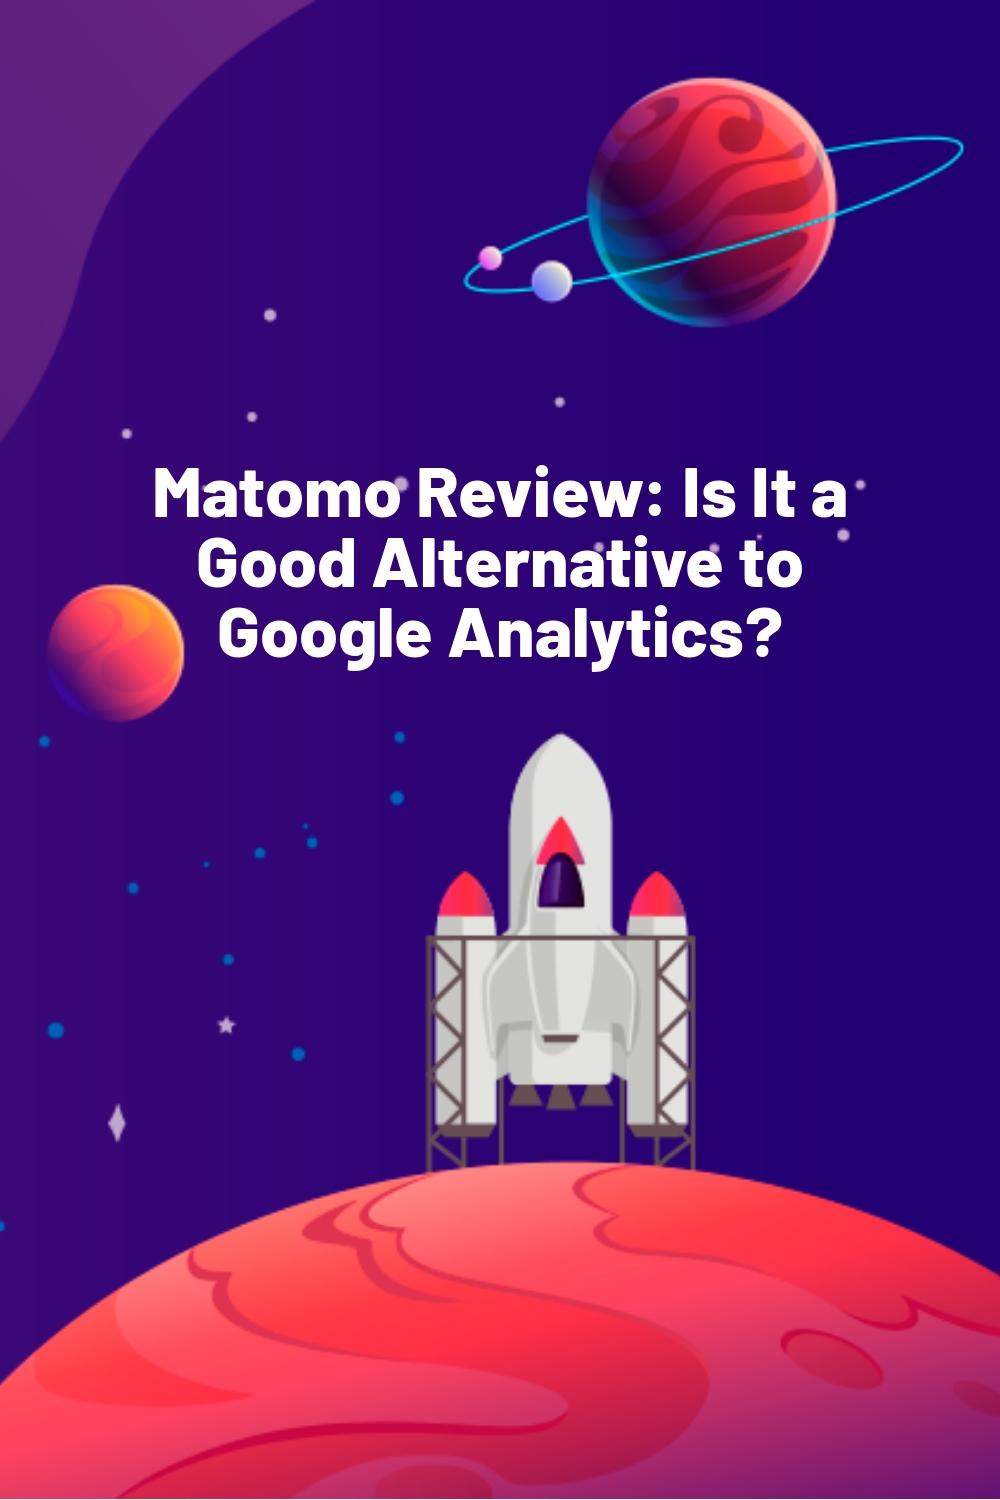 Matomo Review: Is It a Good Alternative to Google Analytics?